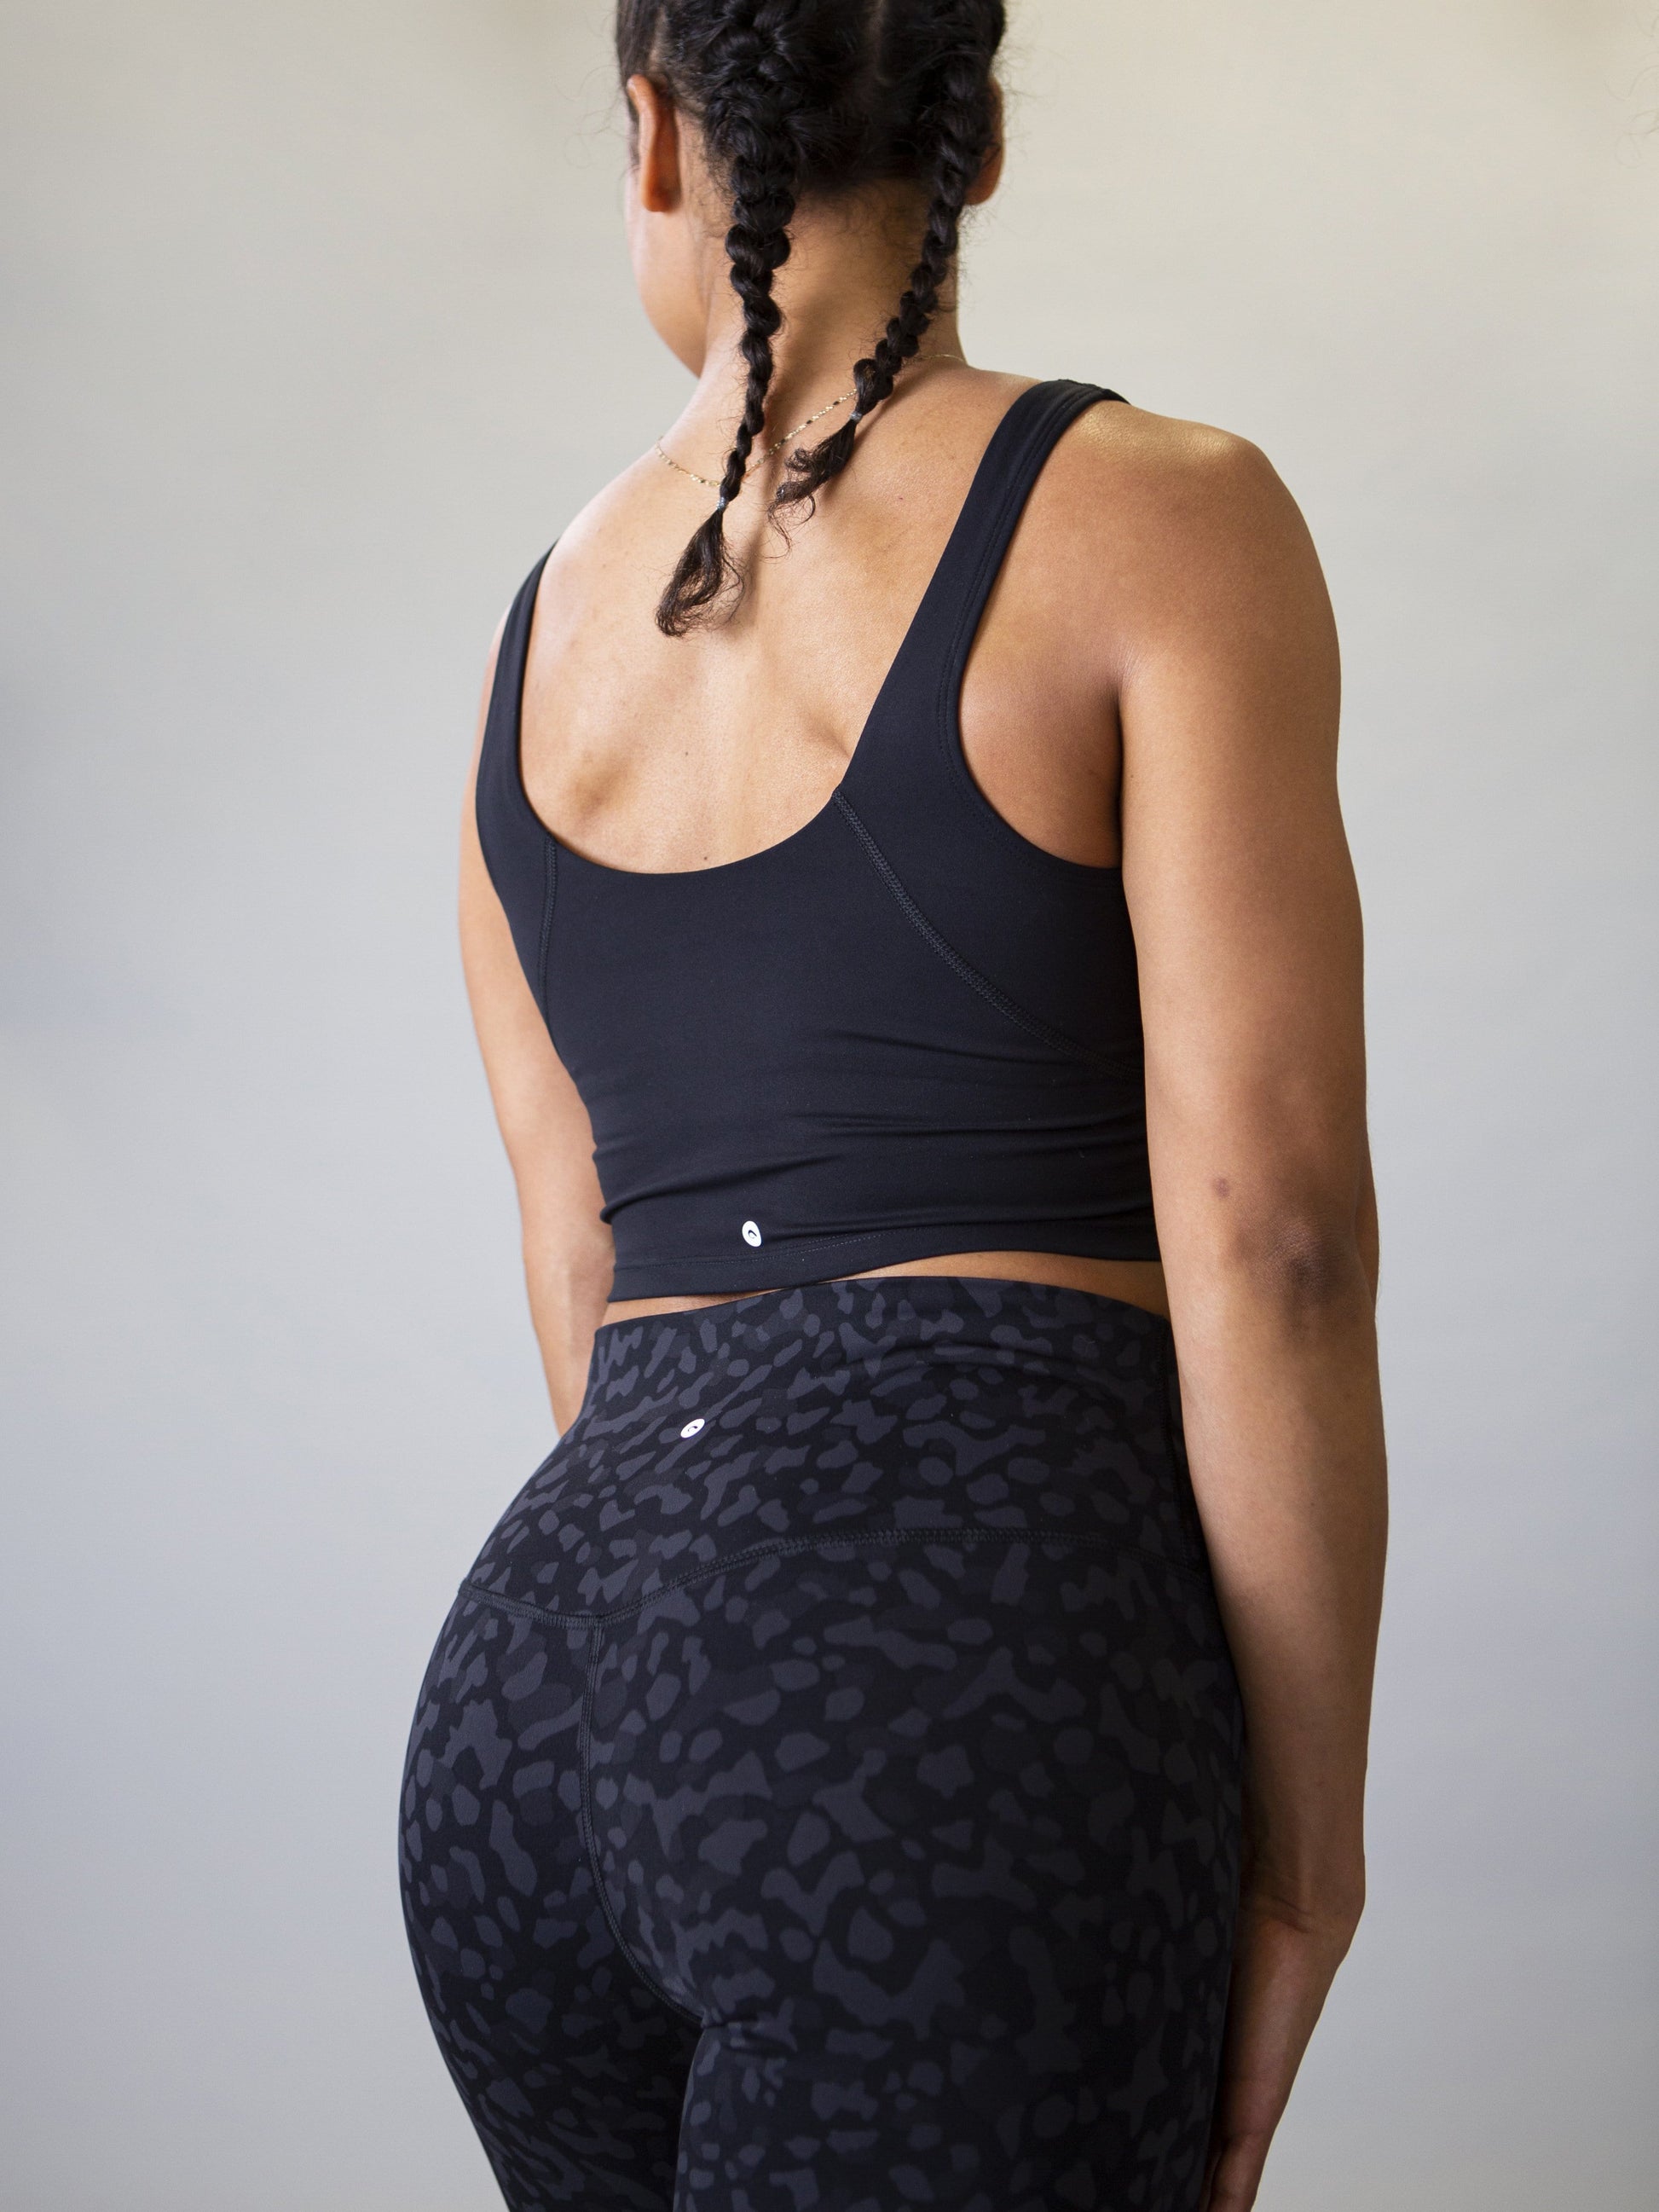 Aayomet Yoga Pants For Women High Waist Womens Leopard Drawstring